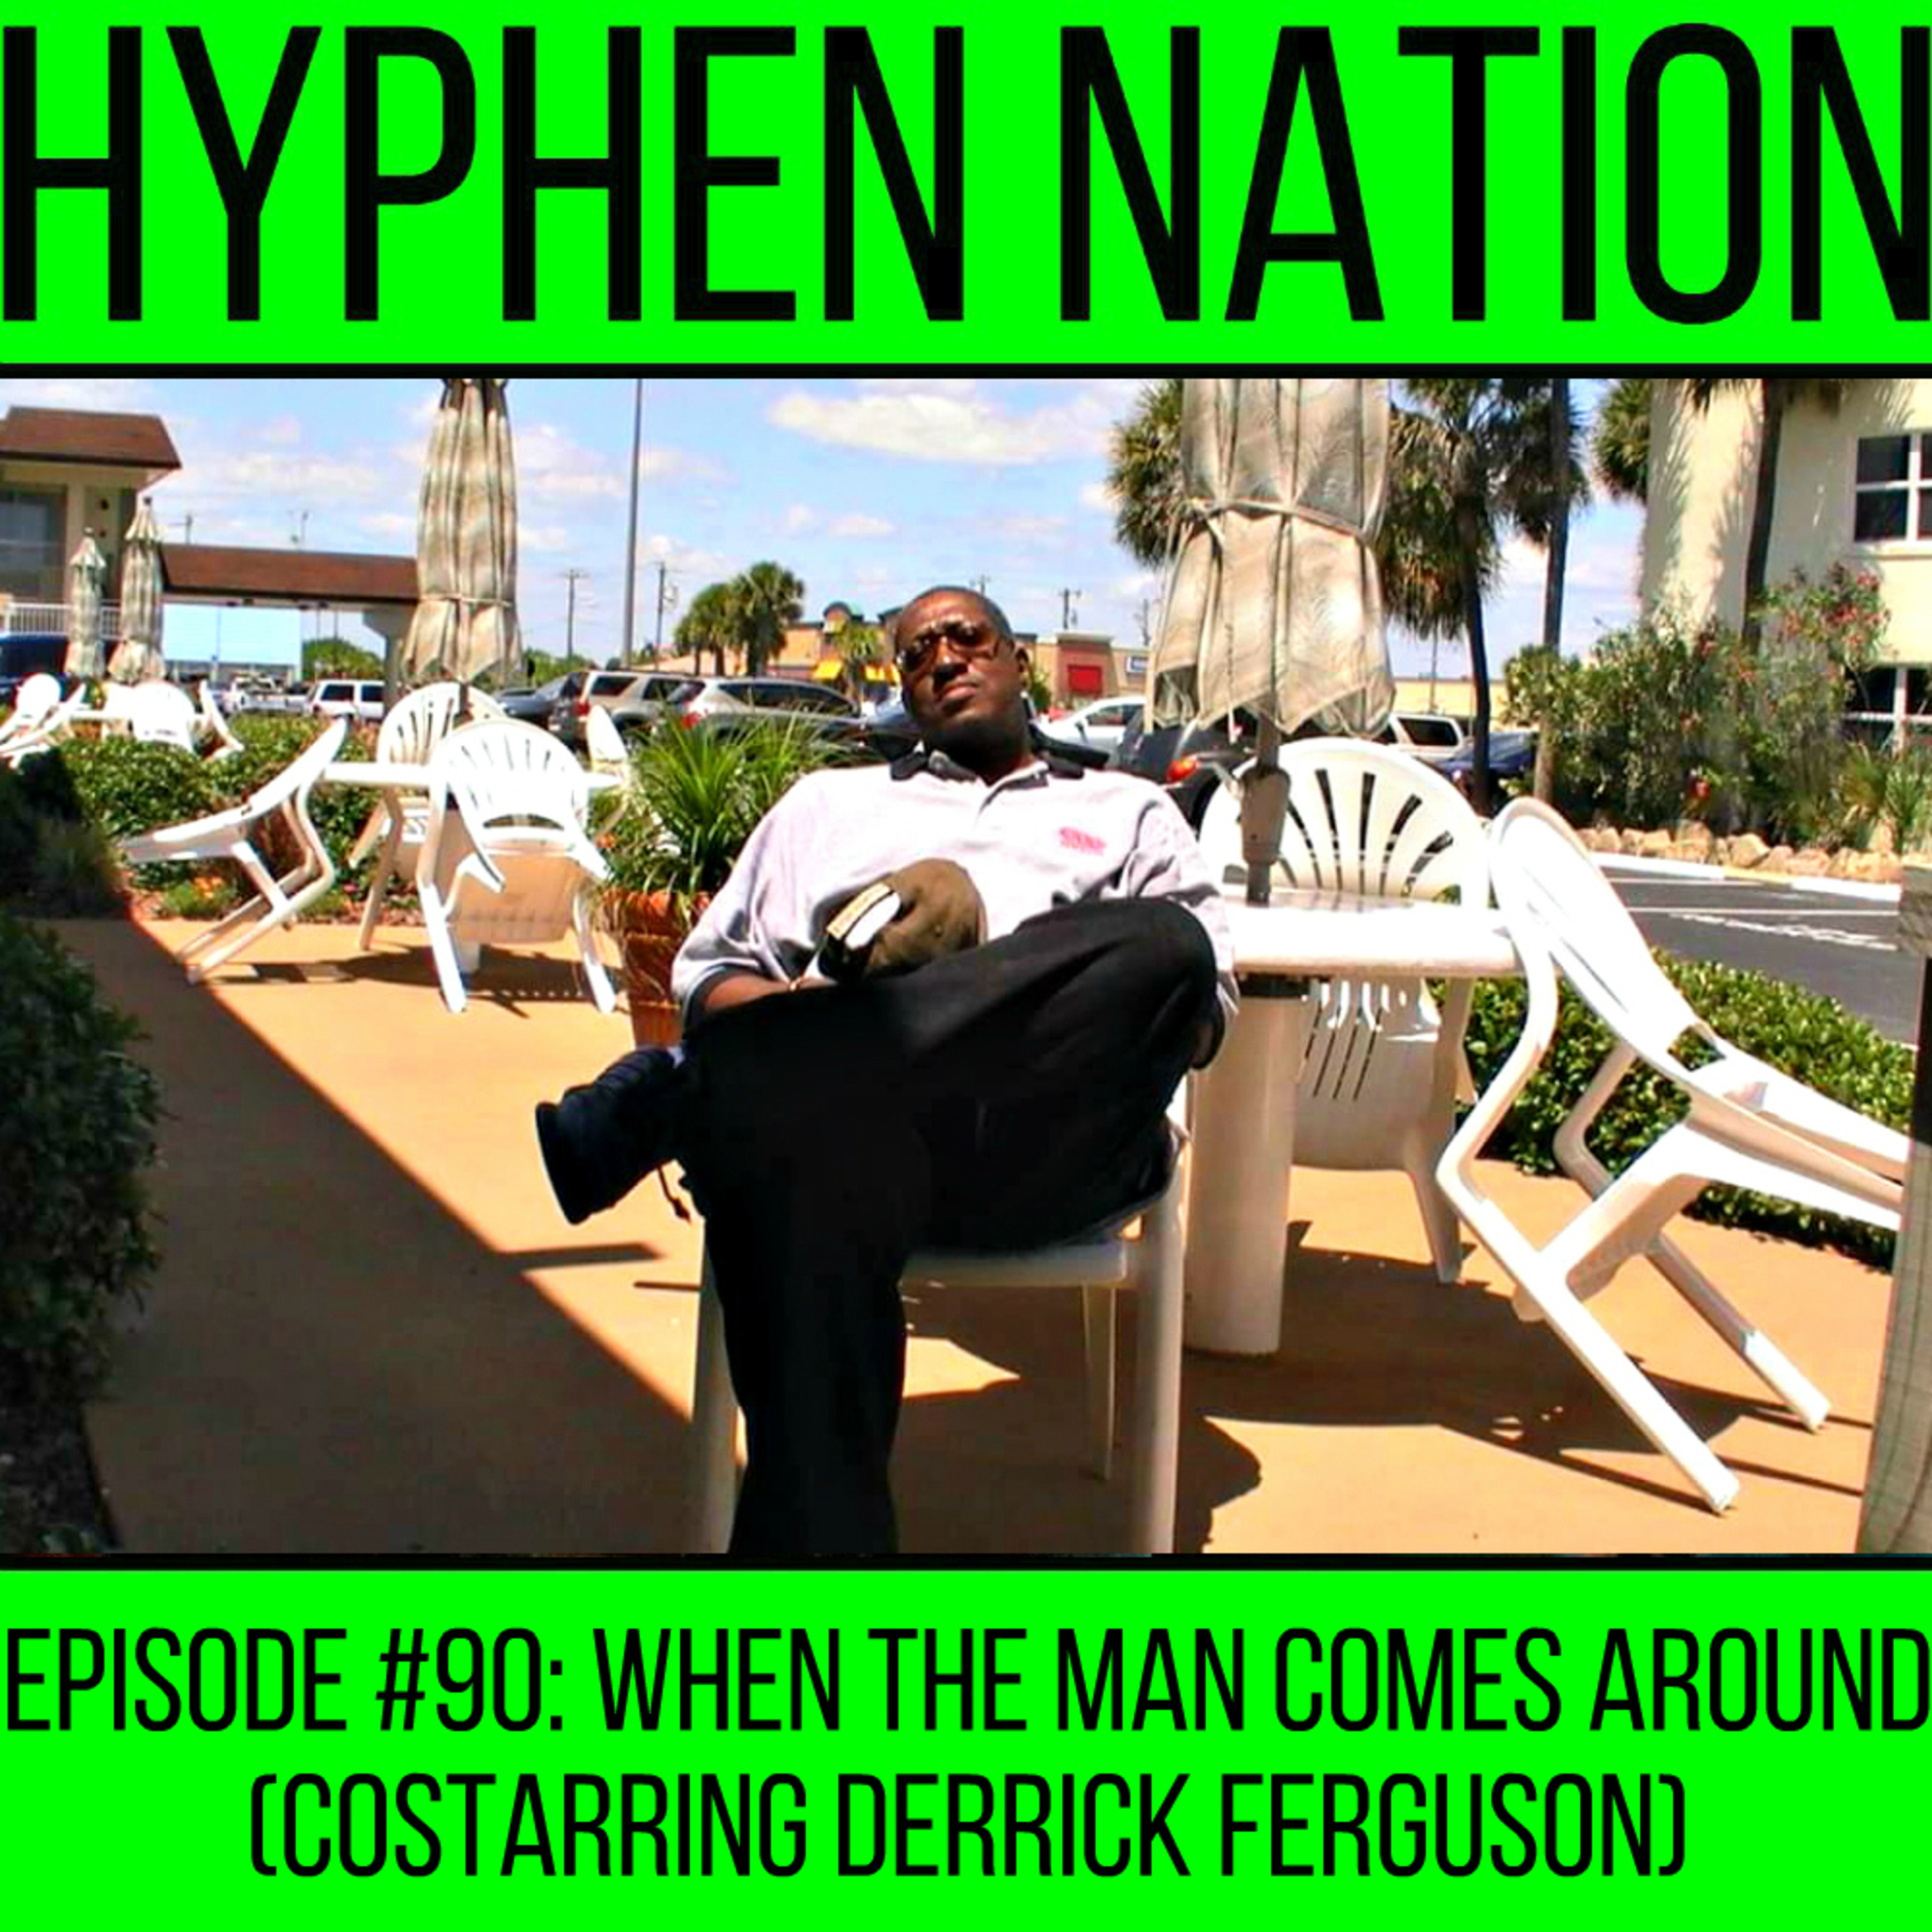 Episode #90: When The Man Comes Around (Costarring Derrick Ferguson)